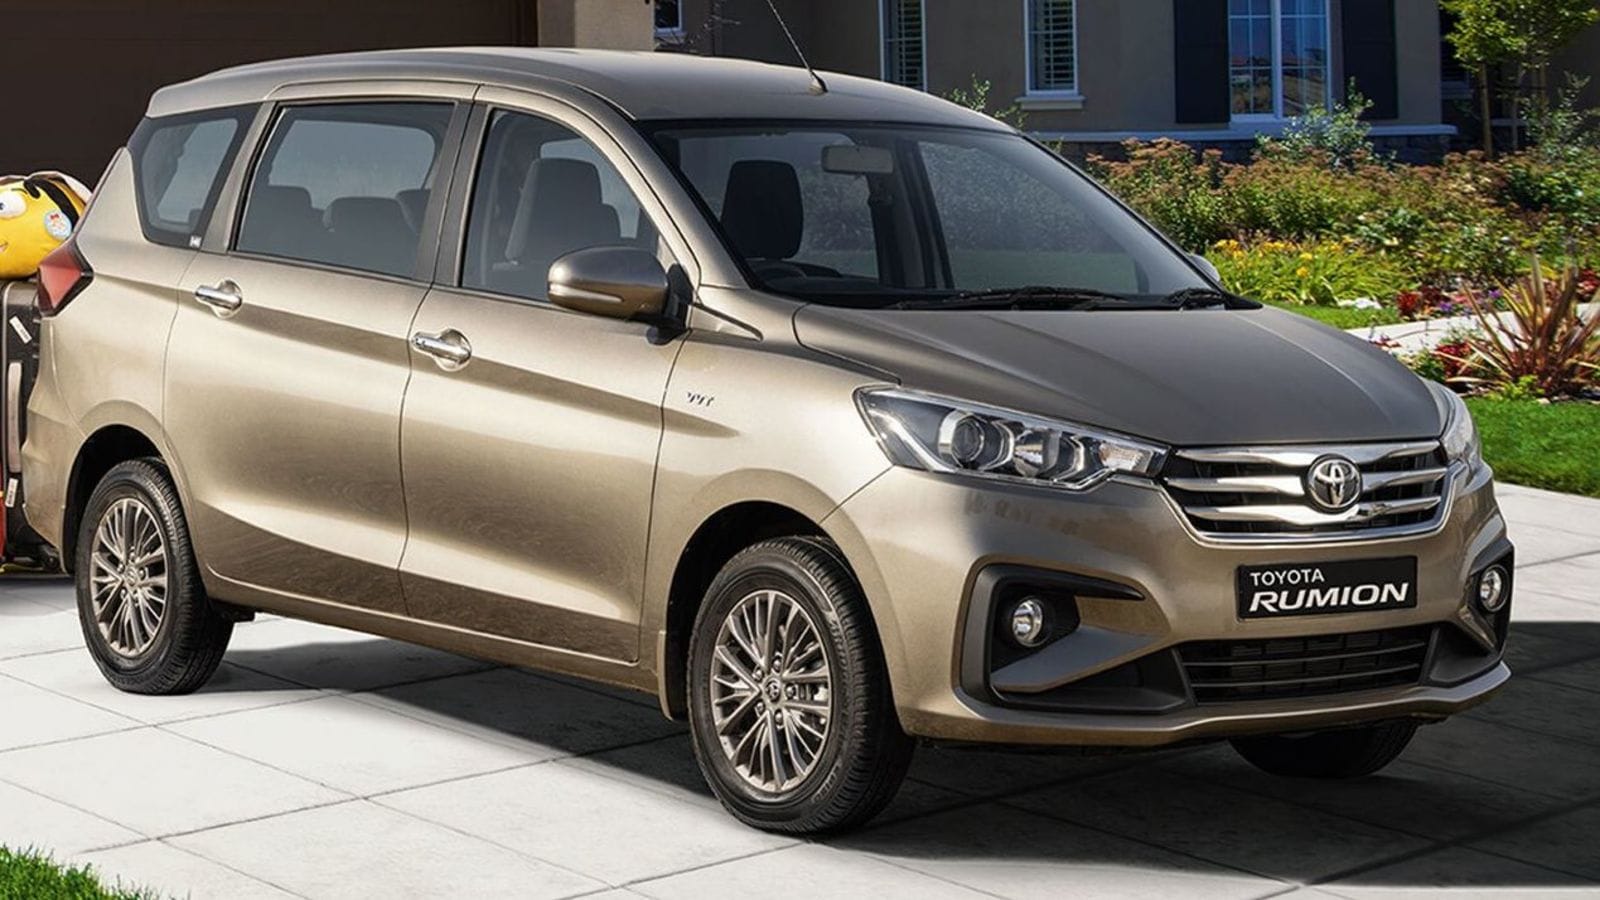 Maruti Suzuki Ertiga-based Toyota Rumion trademarked in India. Launch  imminent? | HT Auto